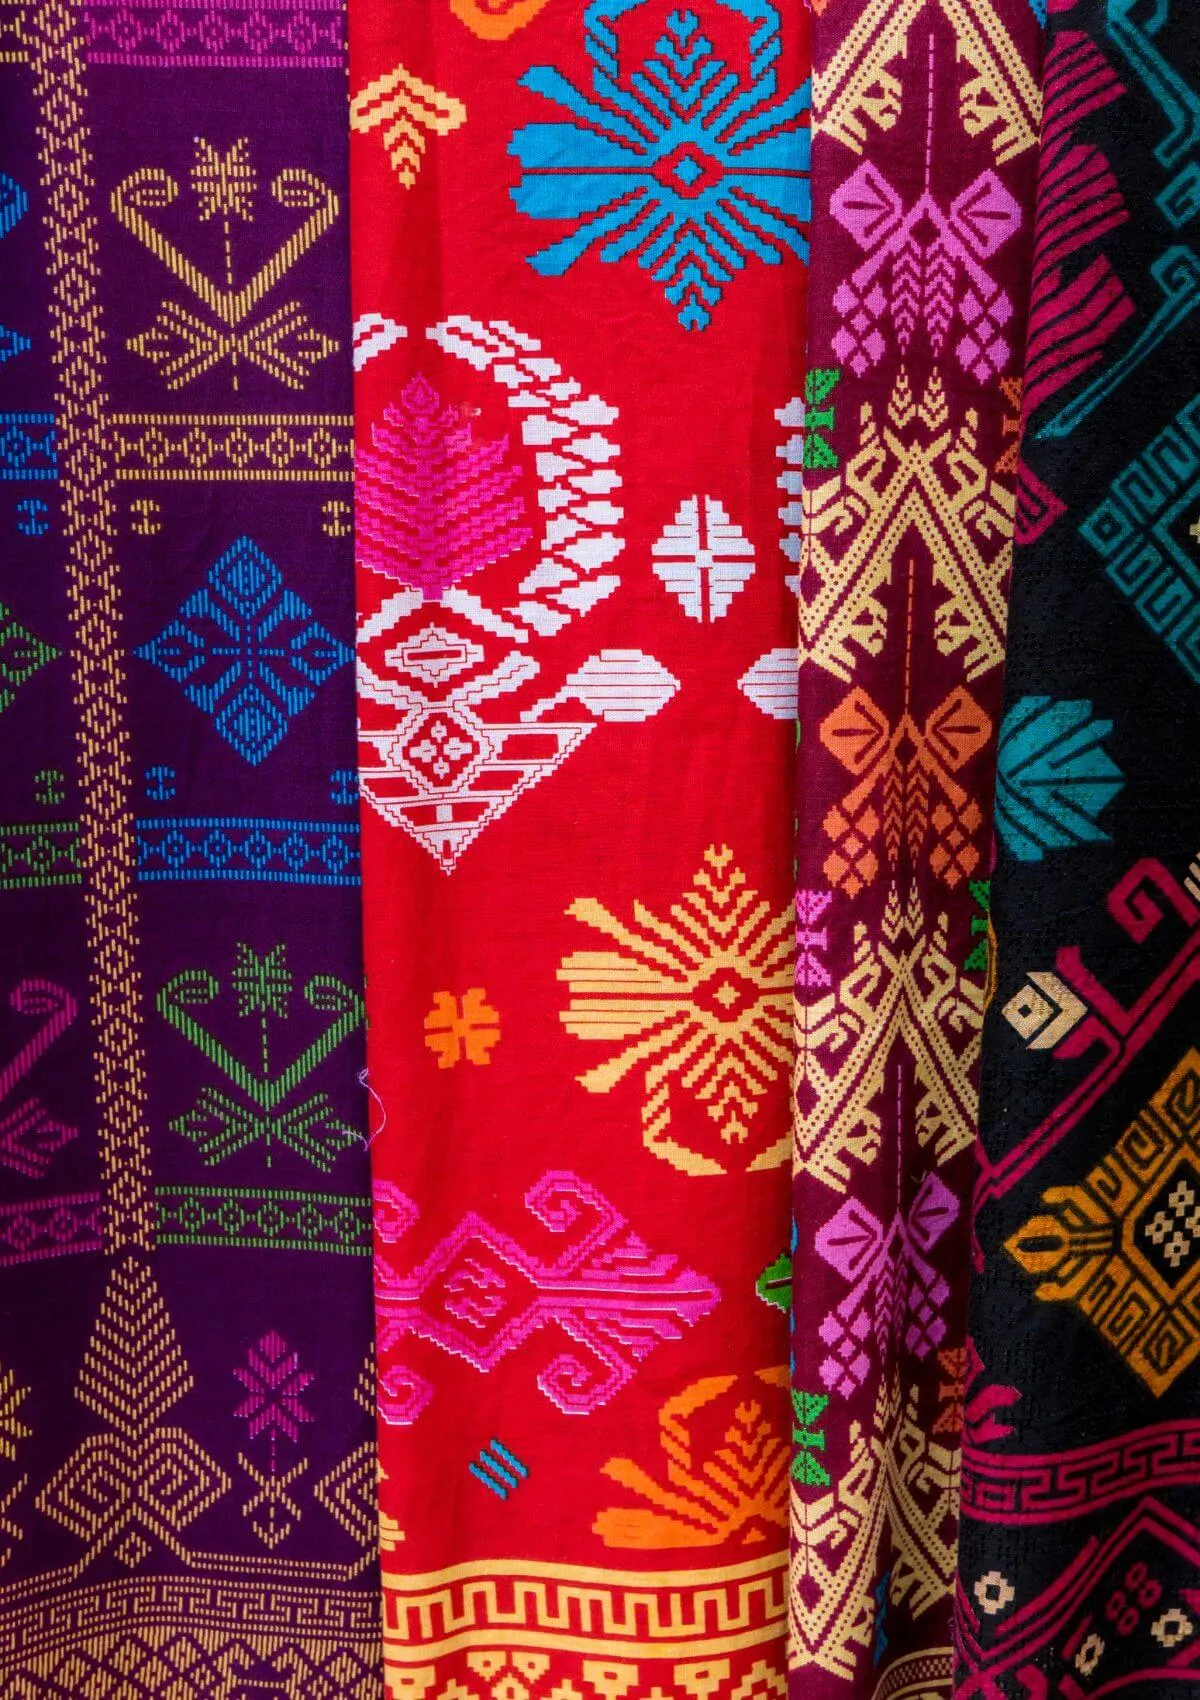 Balinese sarong souvenirs